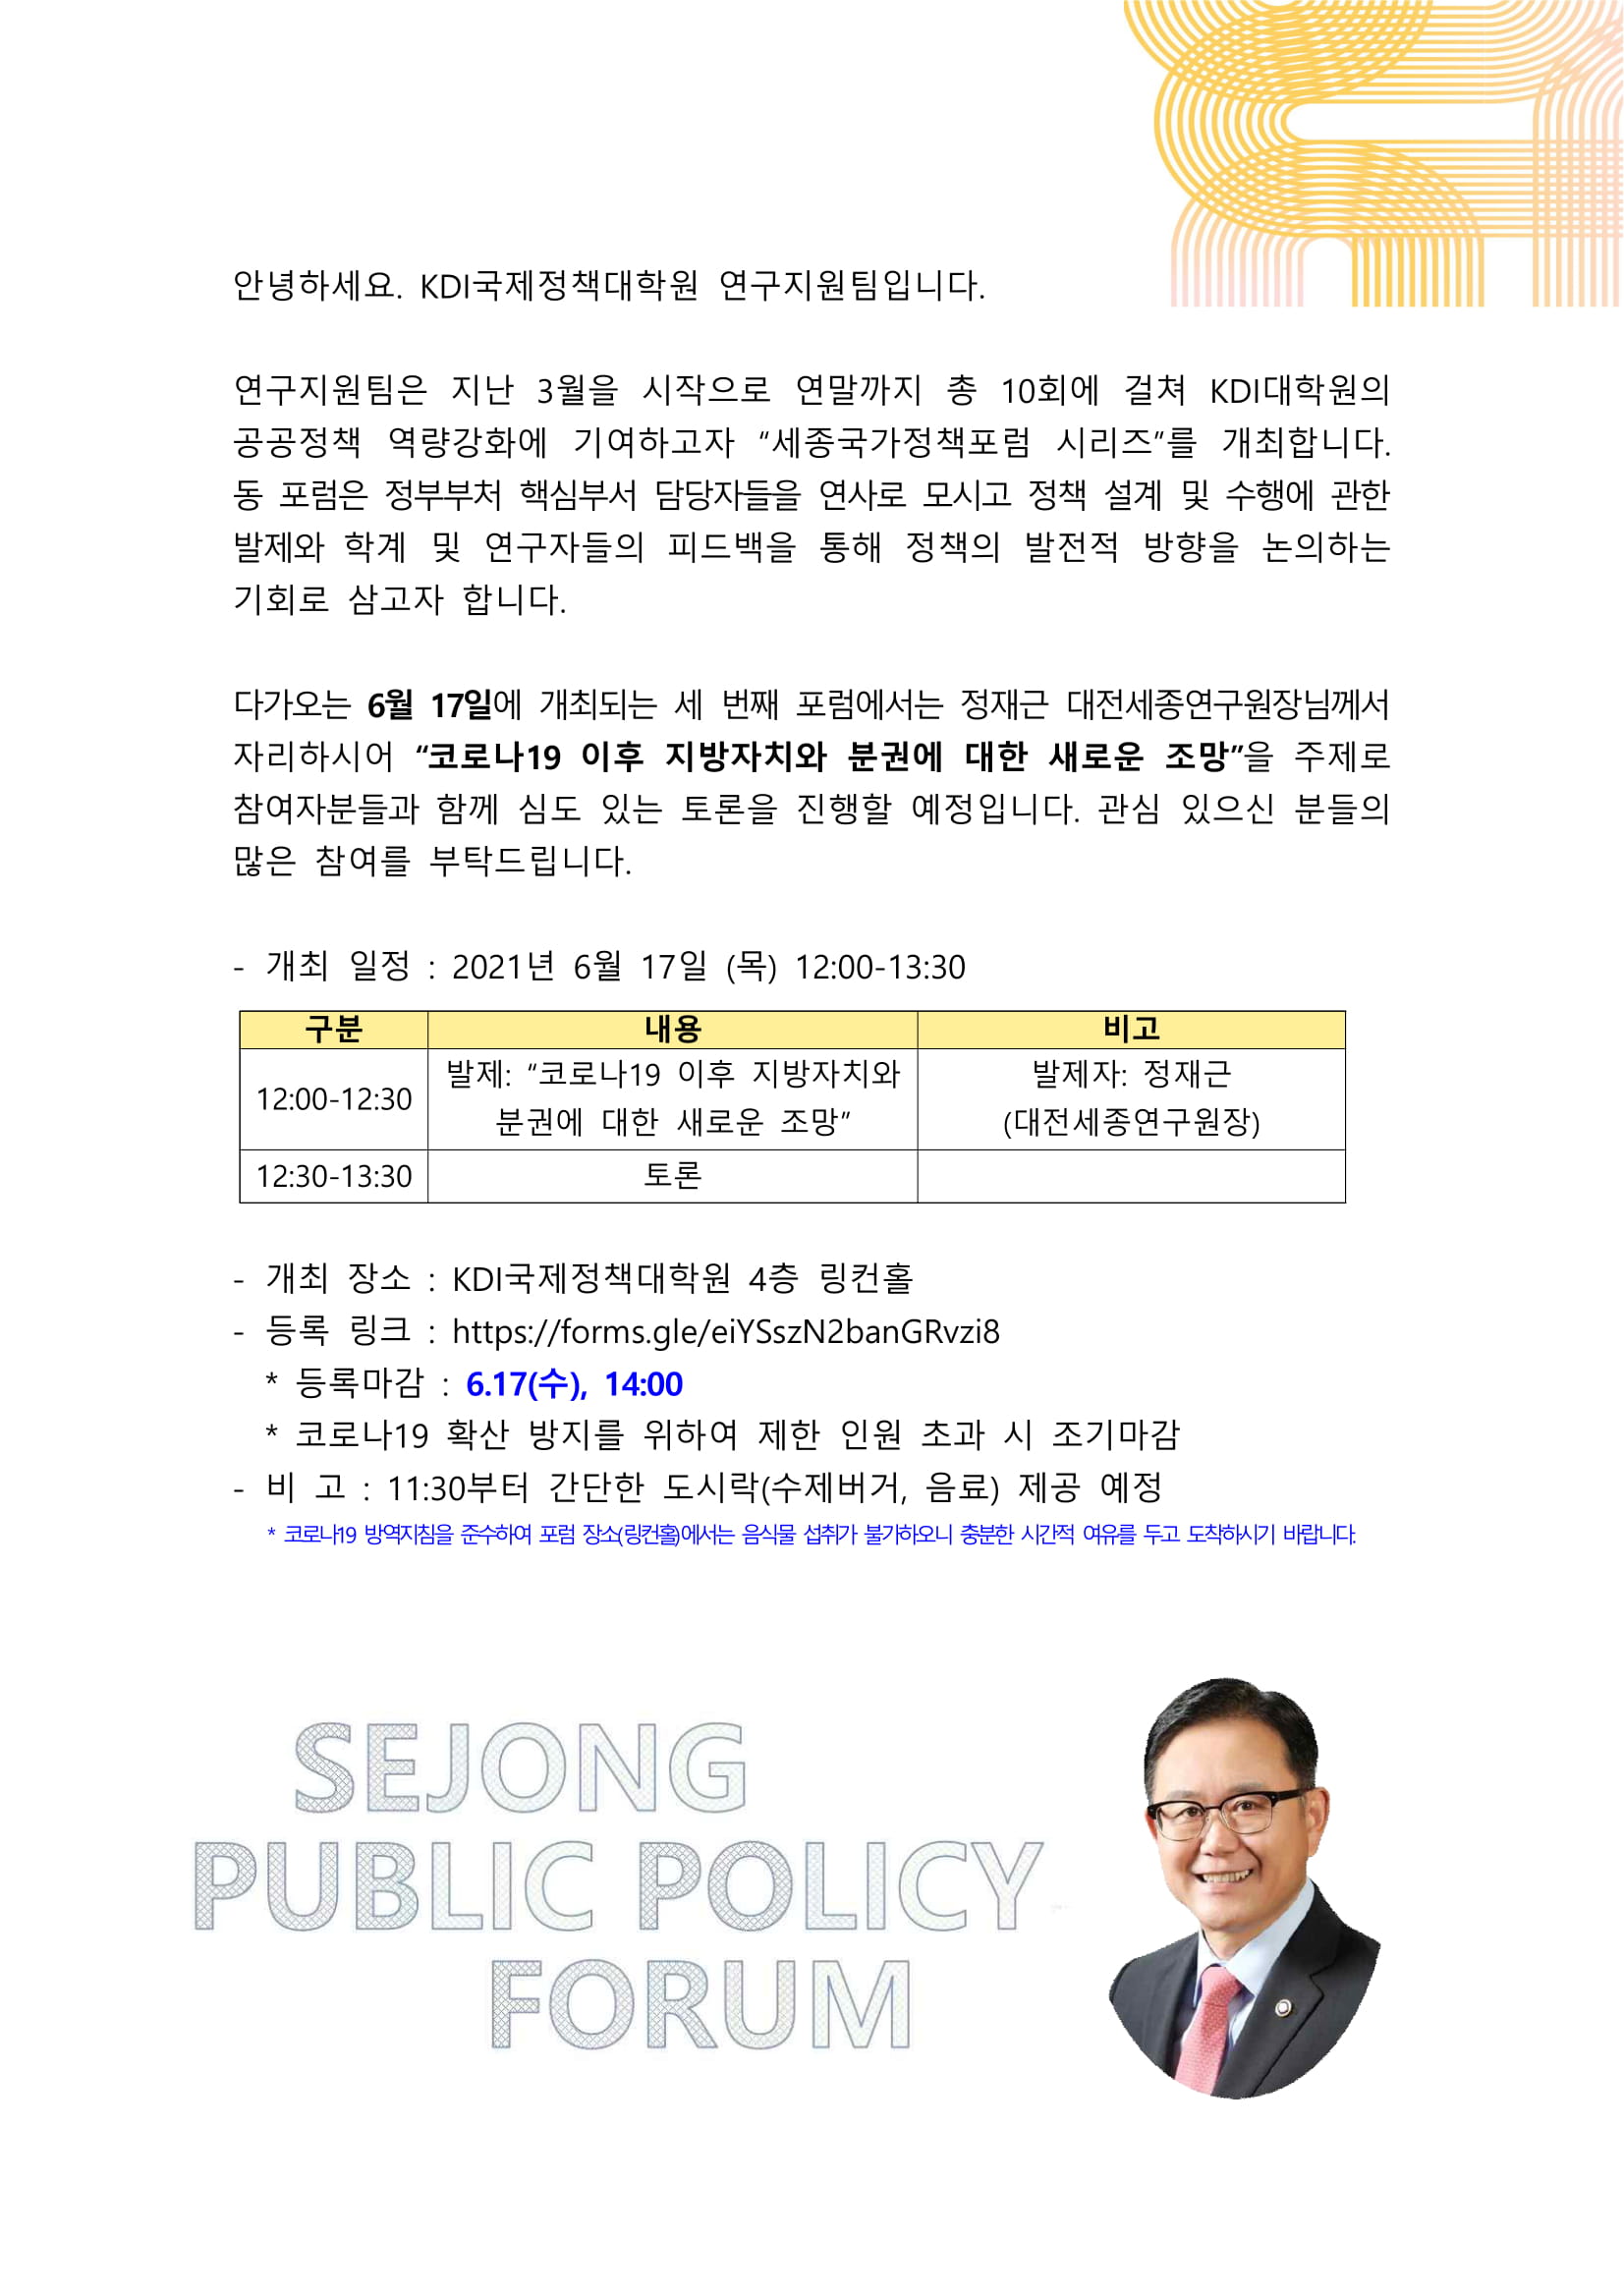 [Invitation] 제3회 세종국가정책포럼 개최 안내 (6월17일(목) 오후12시)